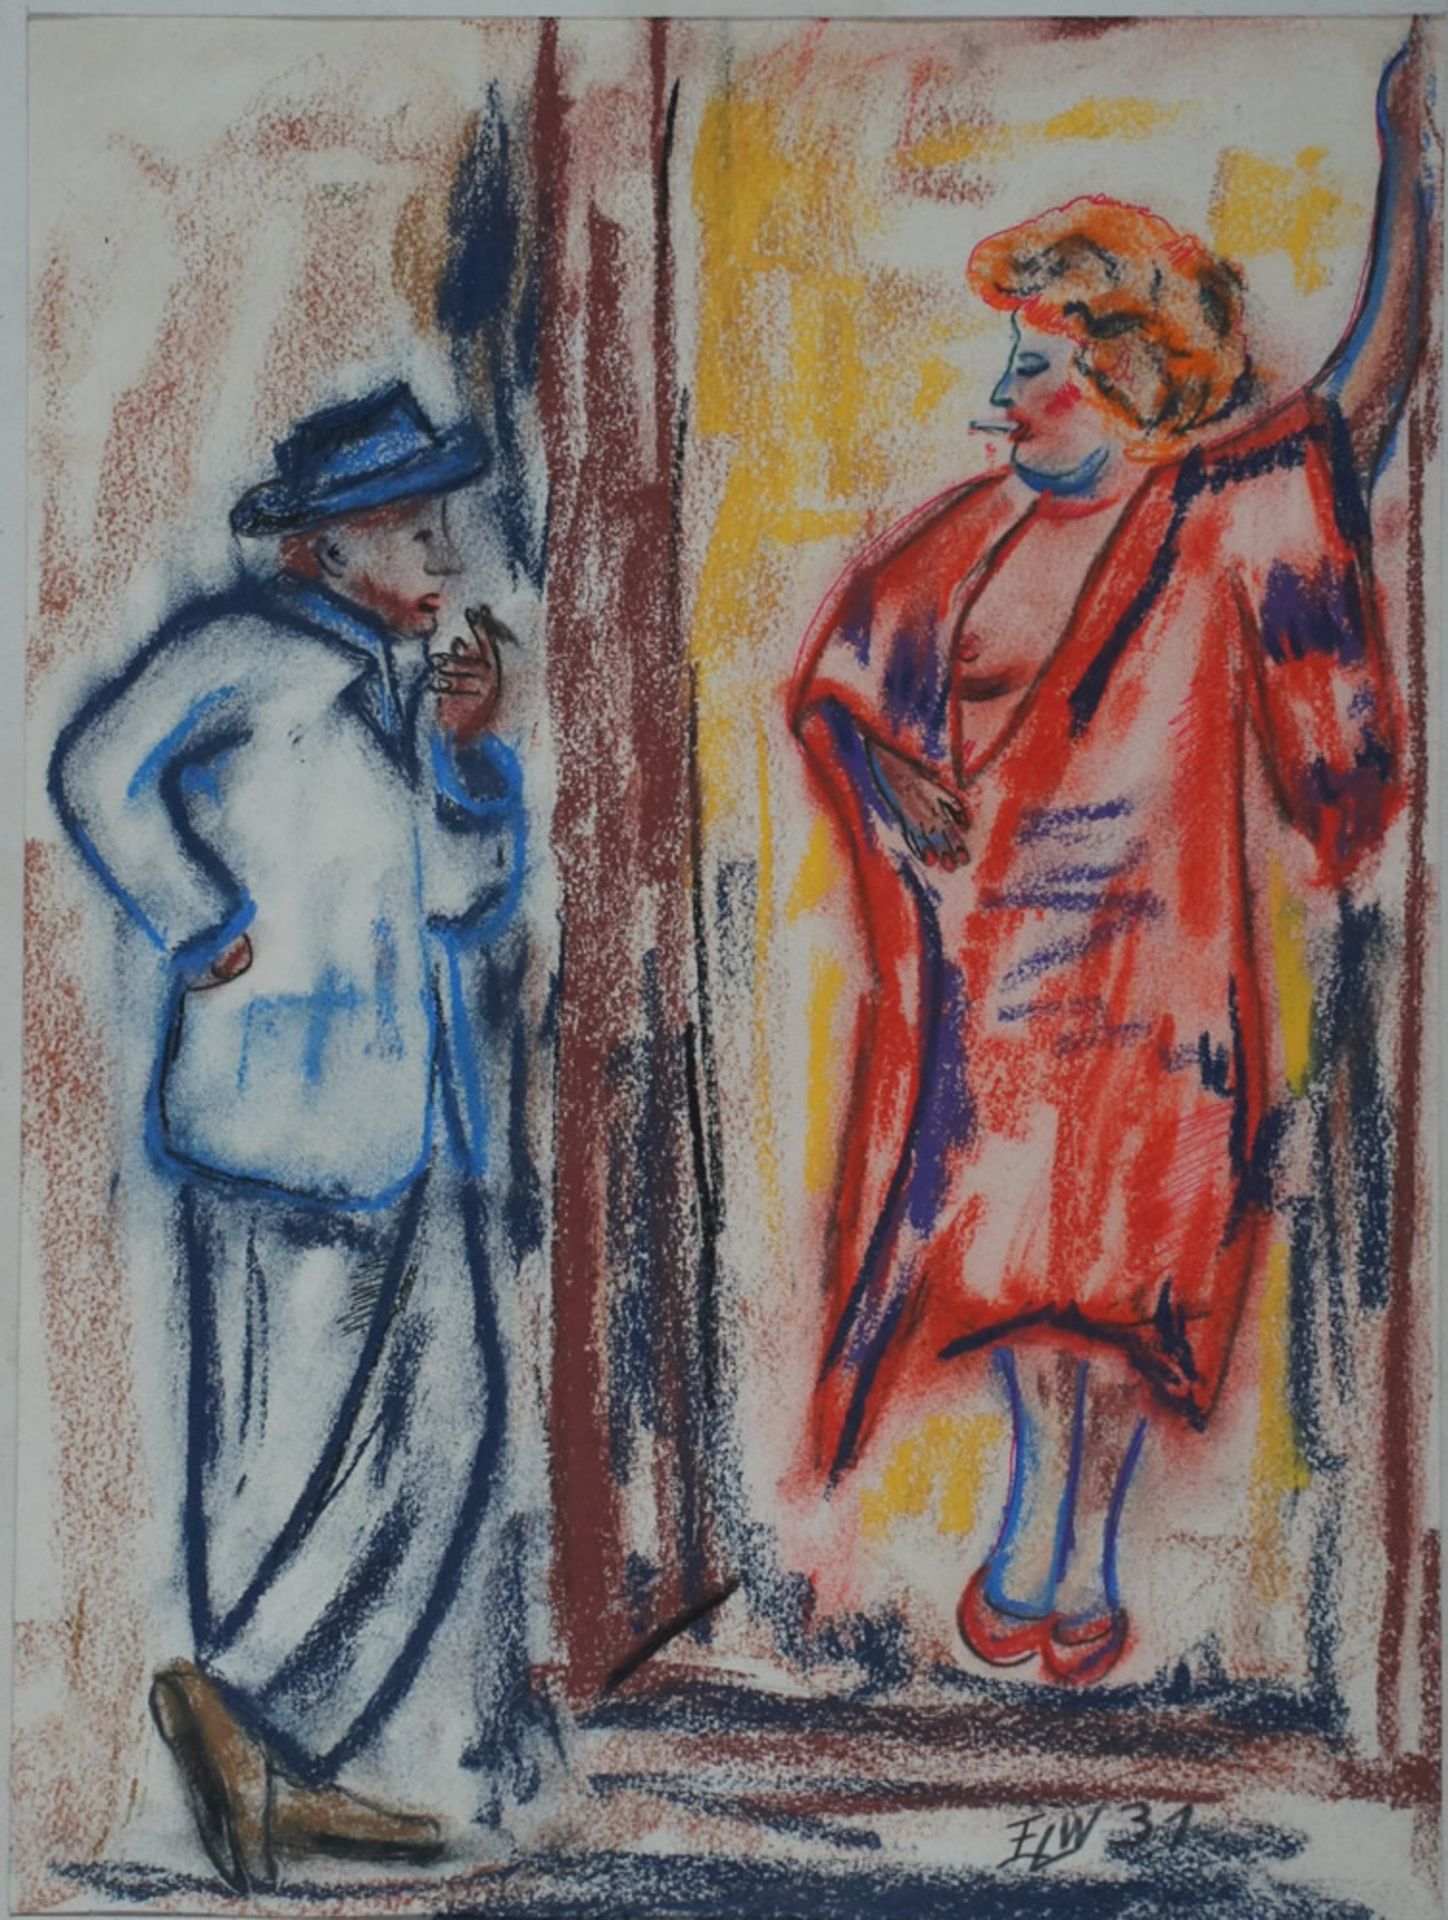 Lohse-Wächtler, Elfriede, Straßengeschäfte, 1931, Mt., 39 x 29 cm